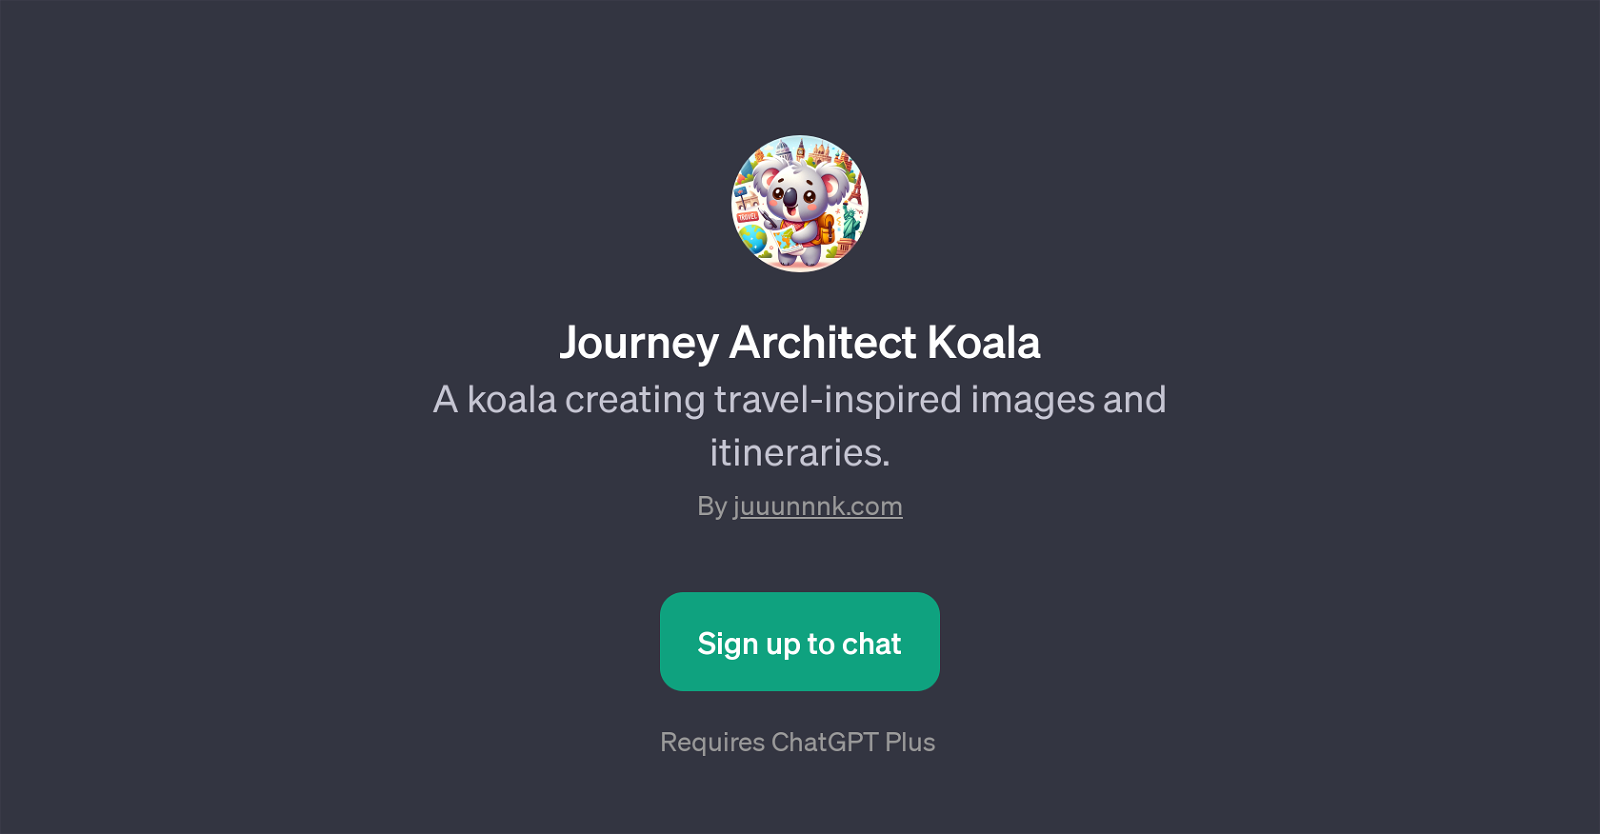 Journey Architect Koala website